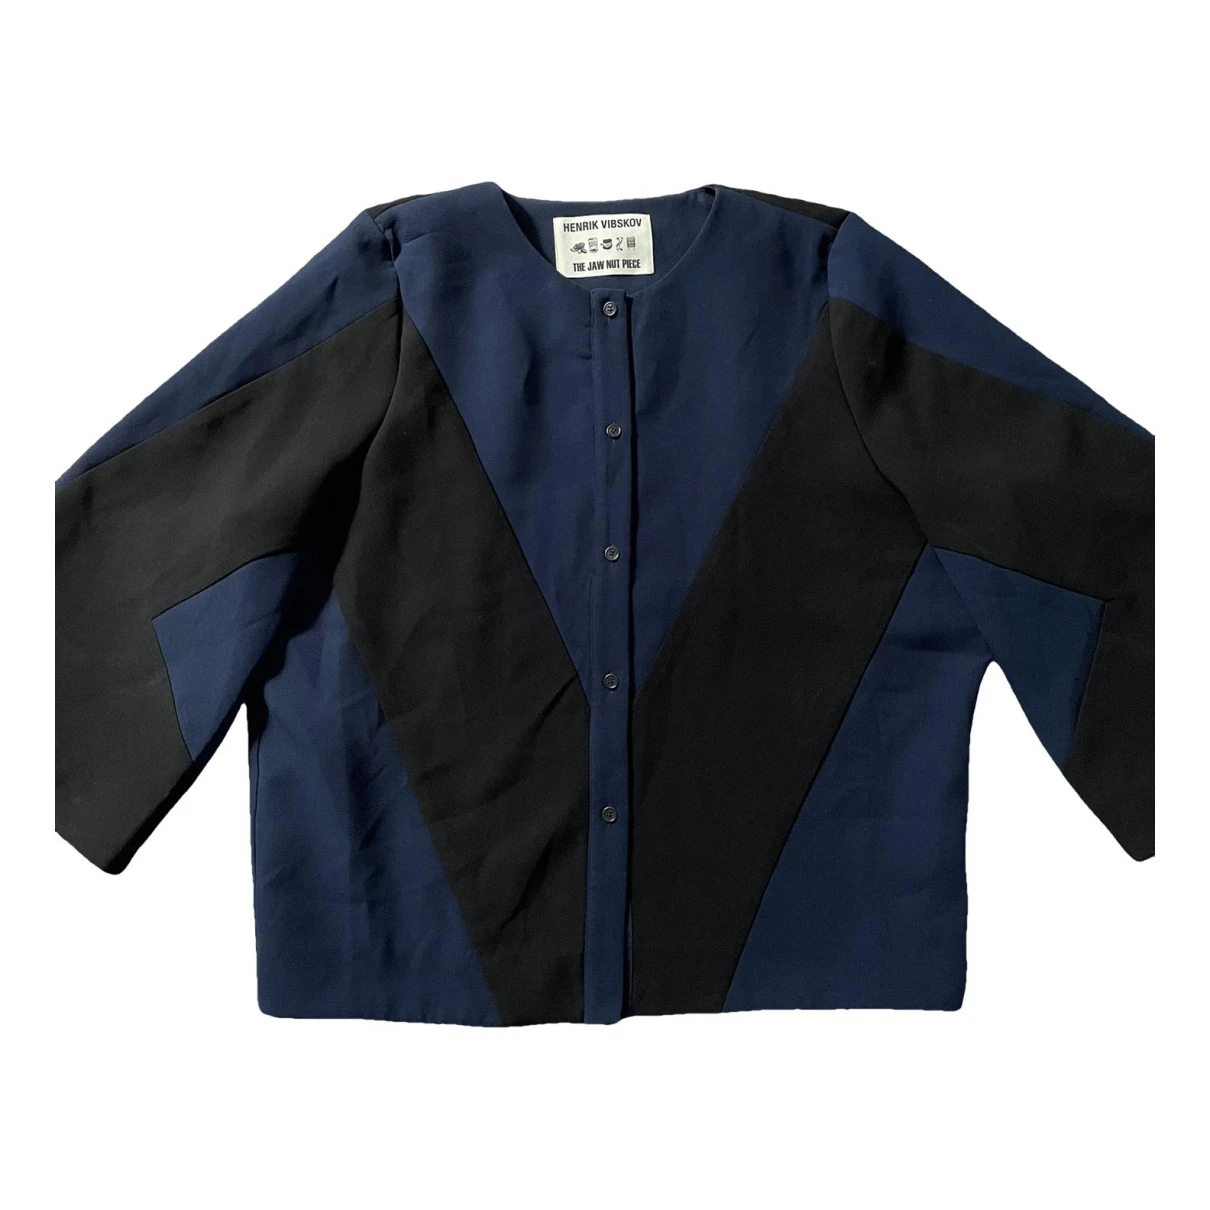 clothing Henrik Vibskov jackets for Female Polyester M International. Used condition